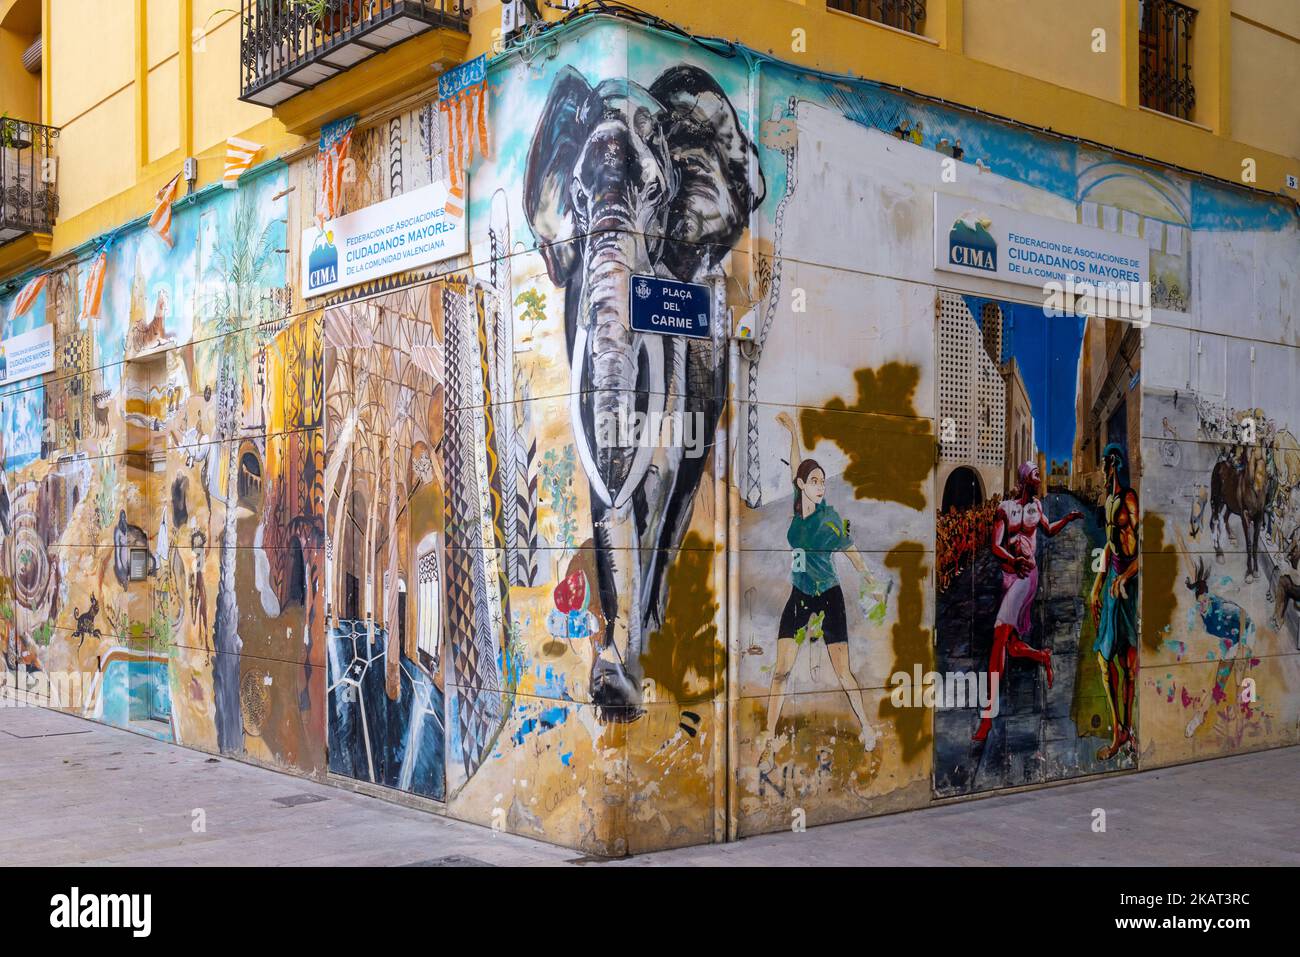 Graffiti on wall, Placa del Carme, Valencia, Spain Stock Photo